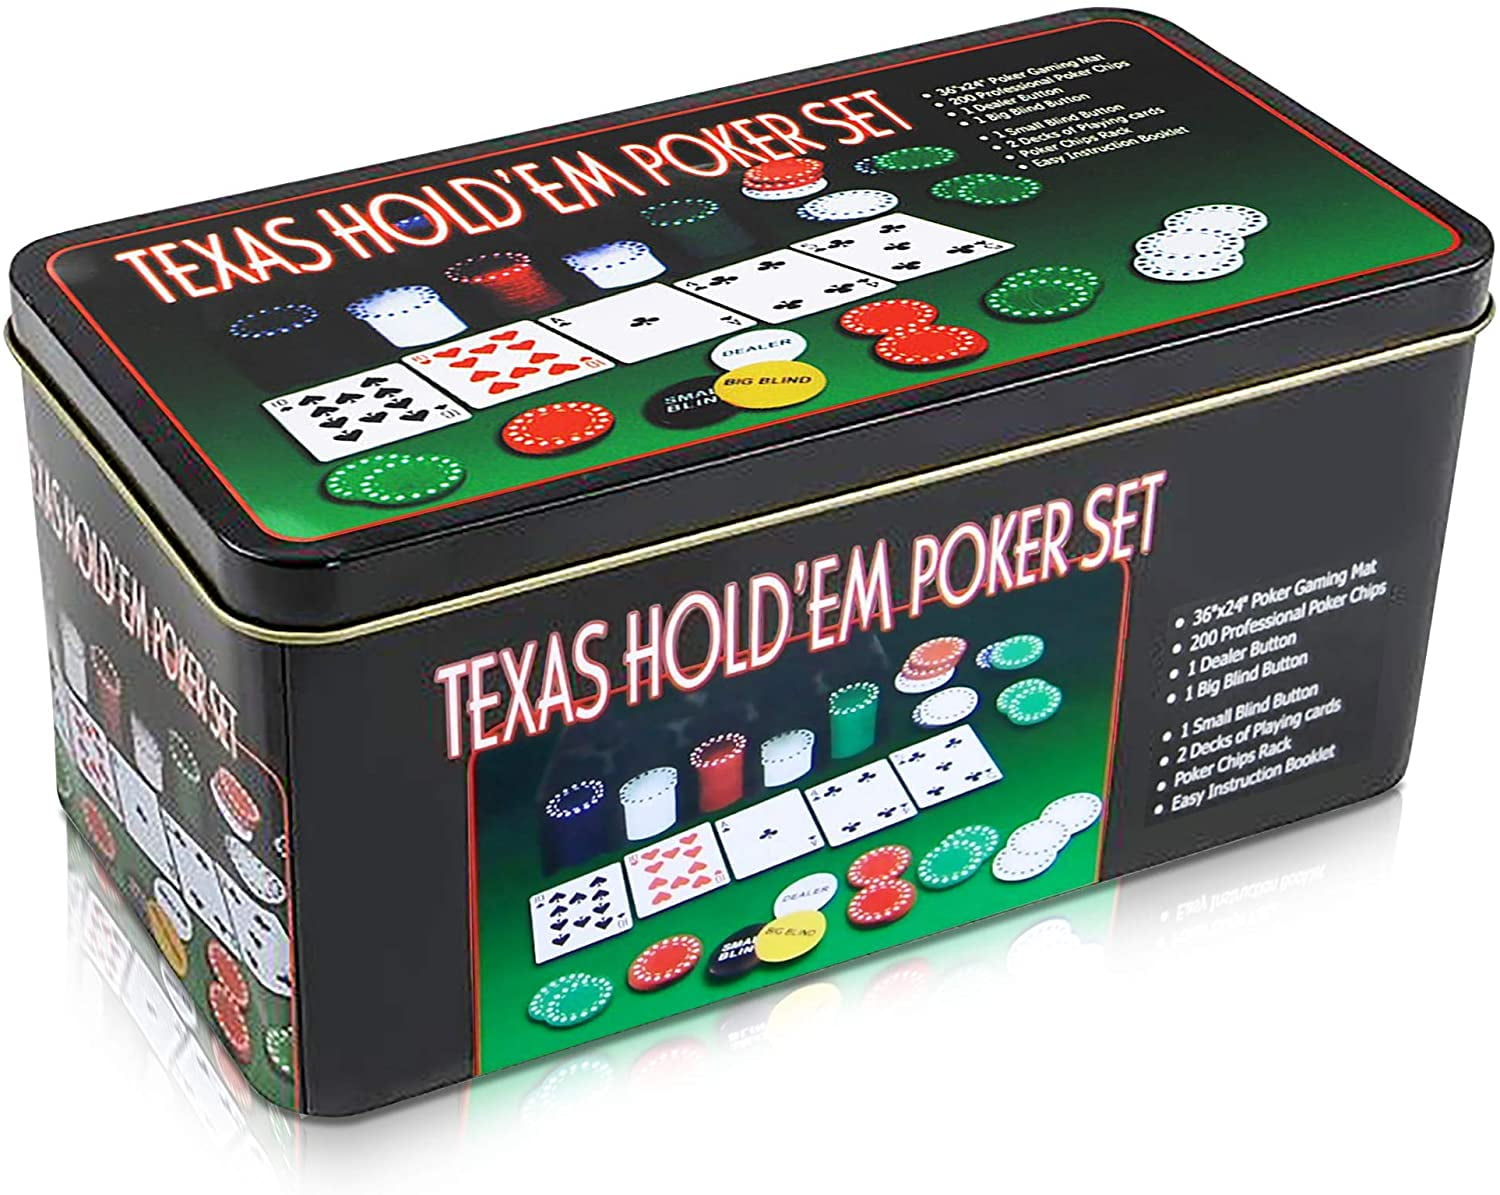 Tactique Pro poker texas hold 'em Poker Set in tin case NEW 